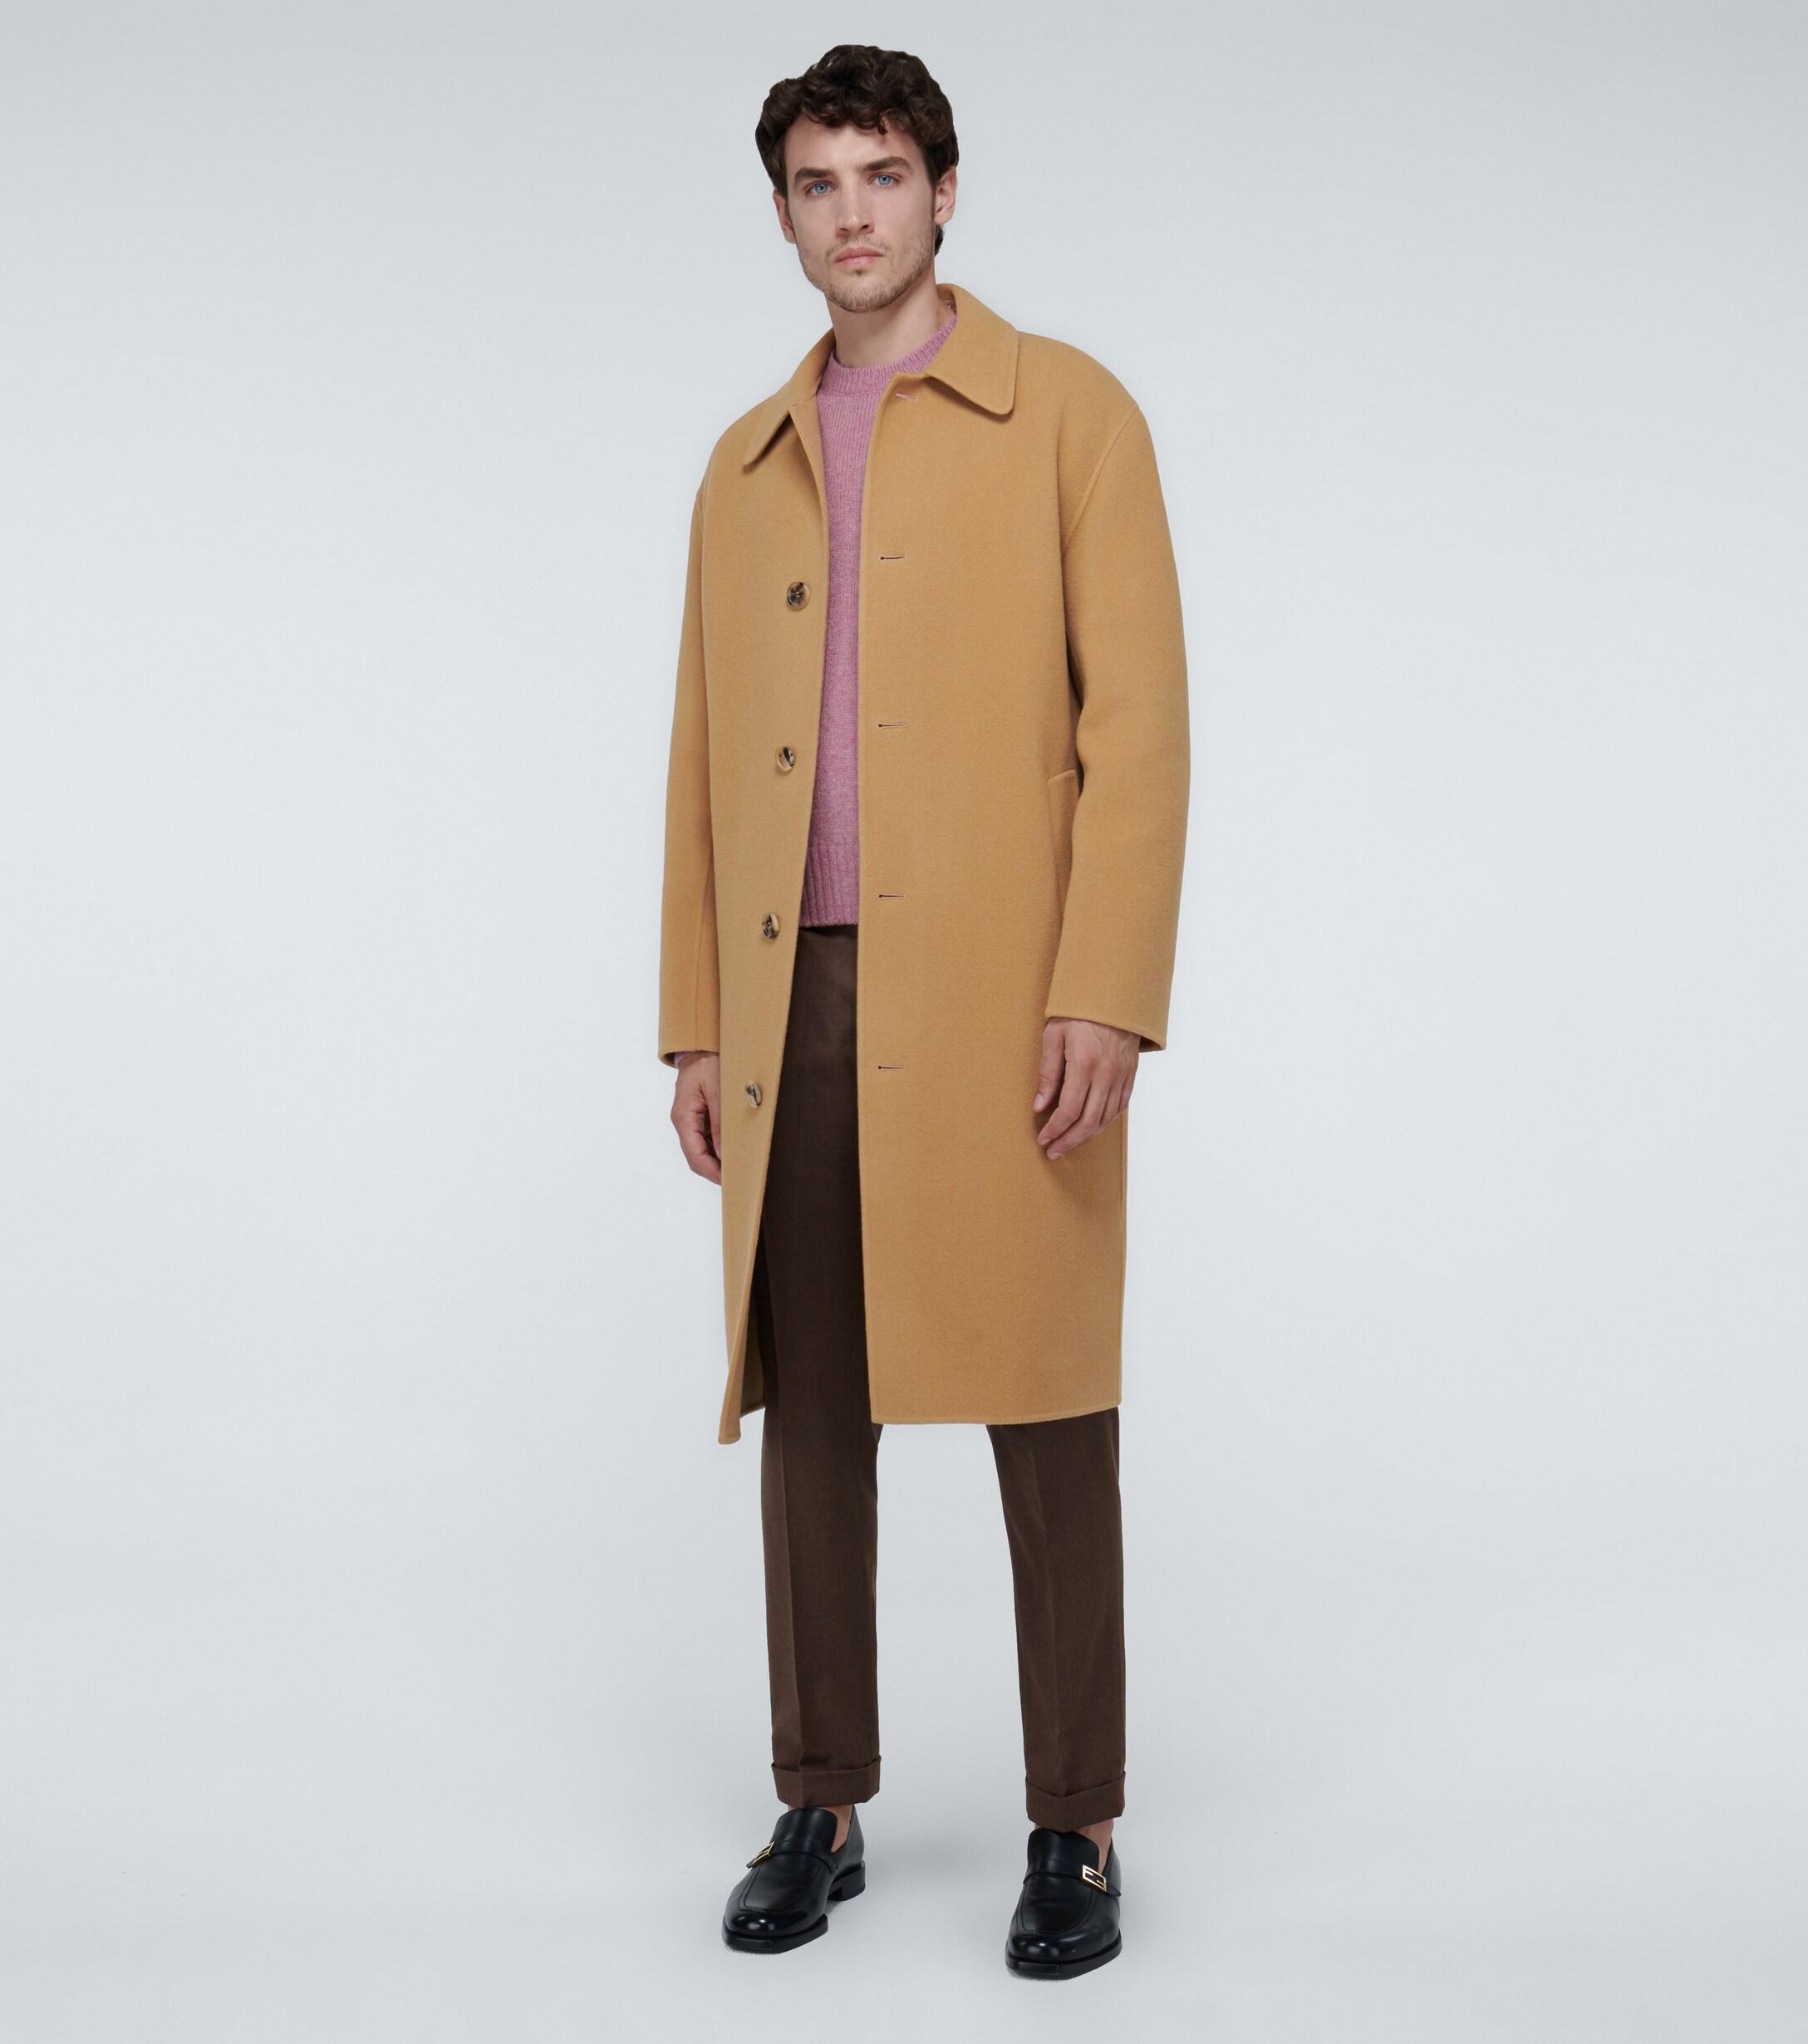 JW Anderson Wool Overcoat in Beige (Natural) for Men - Lyst